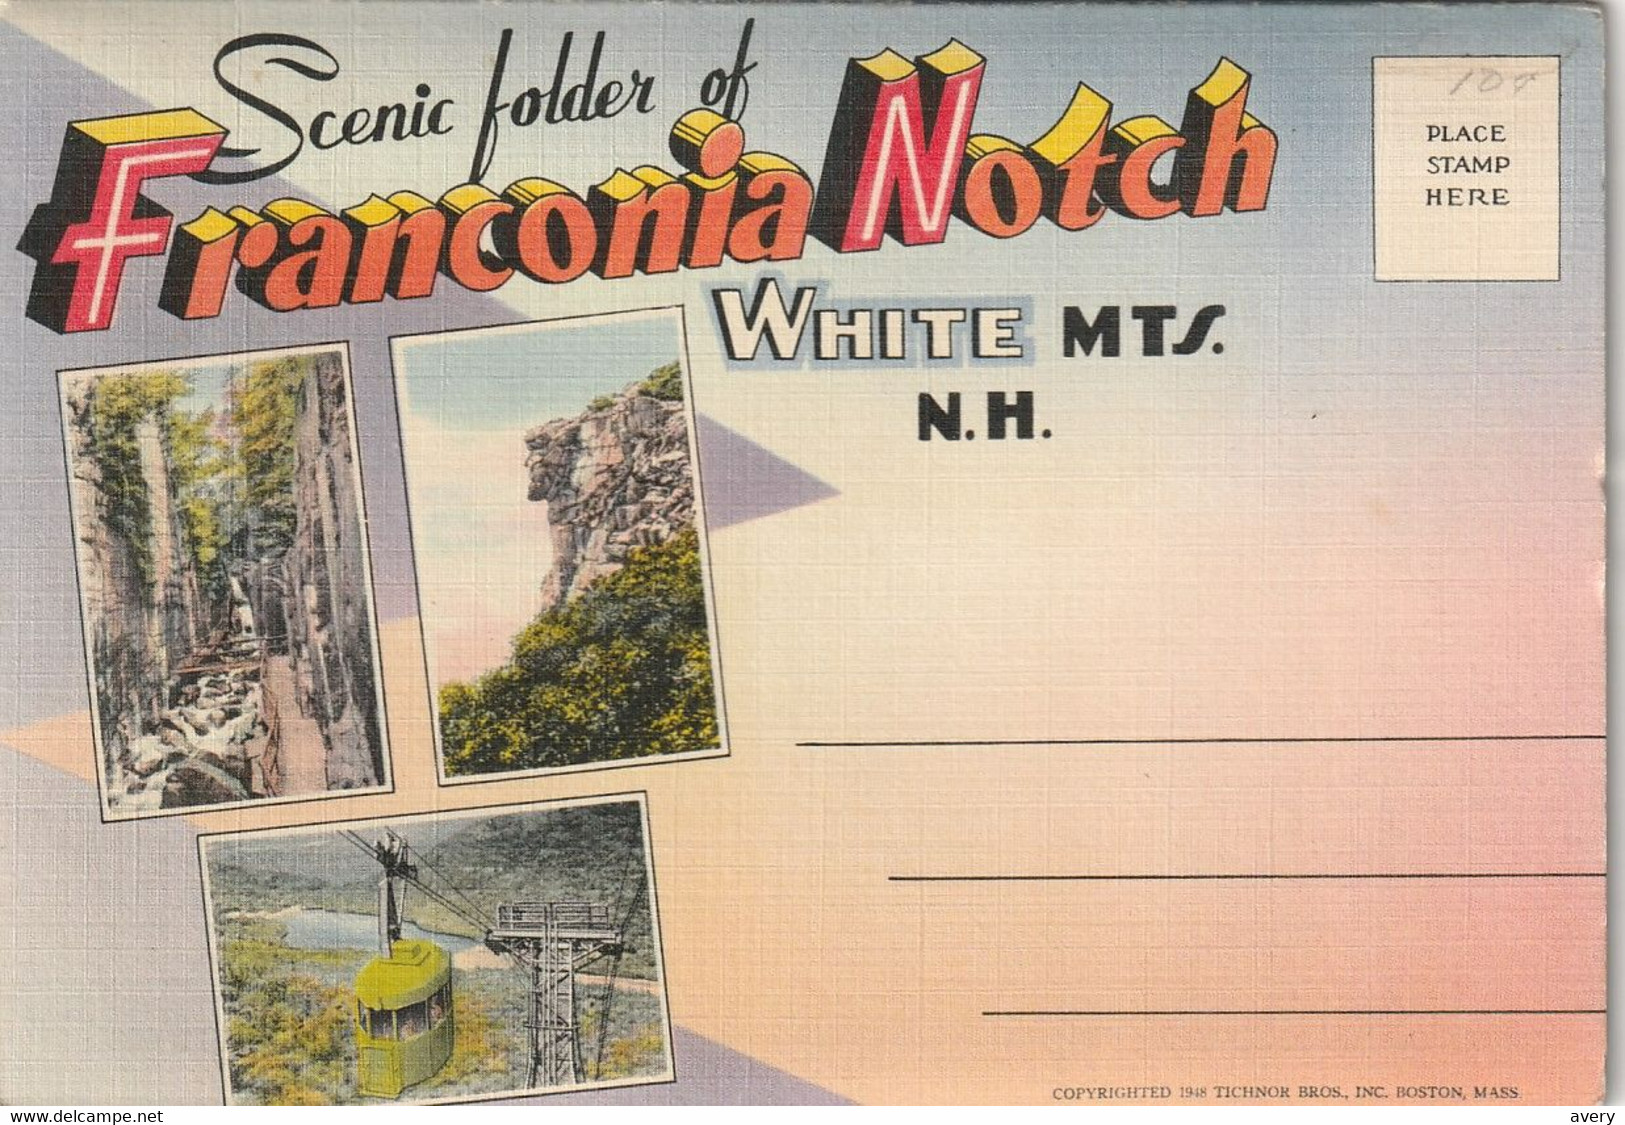 Scenic Folder Of Franconia Notch, White Mountains, New Hampshire - White Mountains